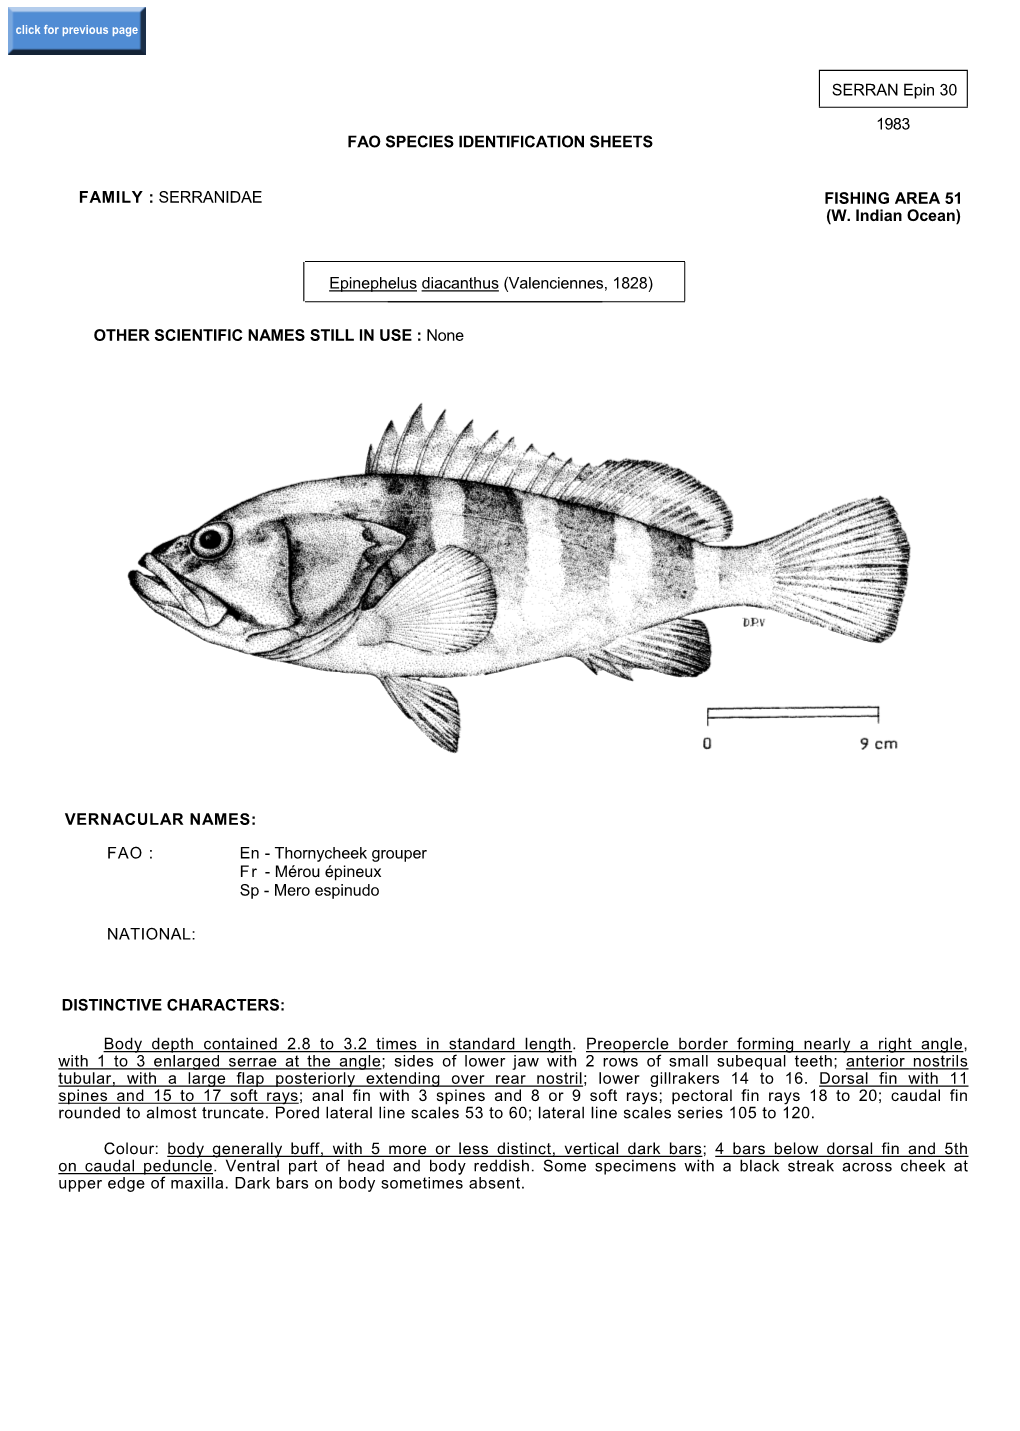 Serranidae Fao Species Identification Sheets